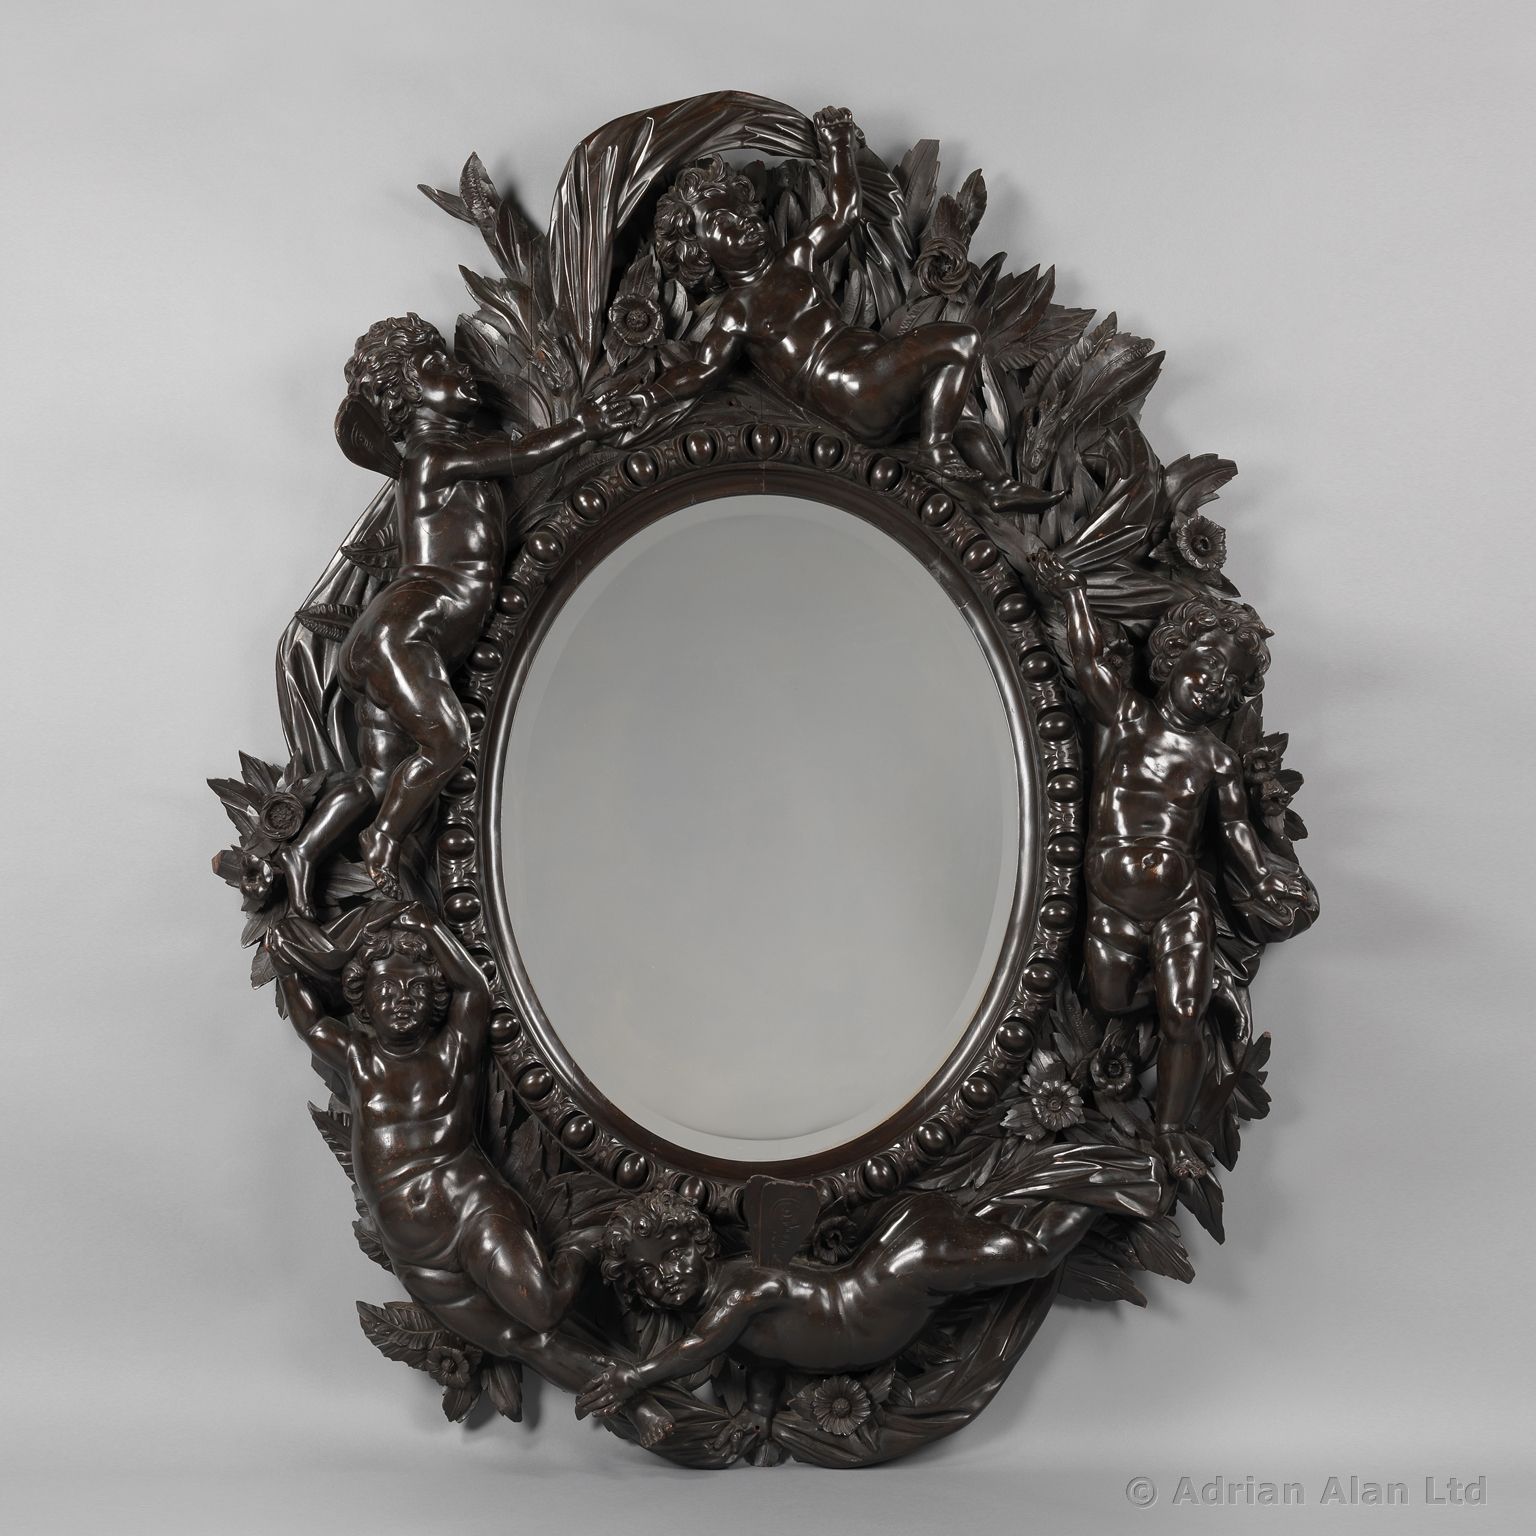 Art Deco Venetian Mirror: Reflections Of Luxury